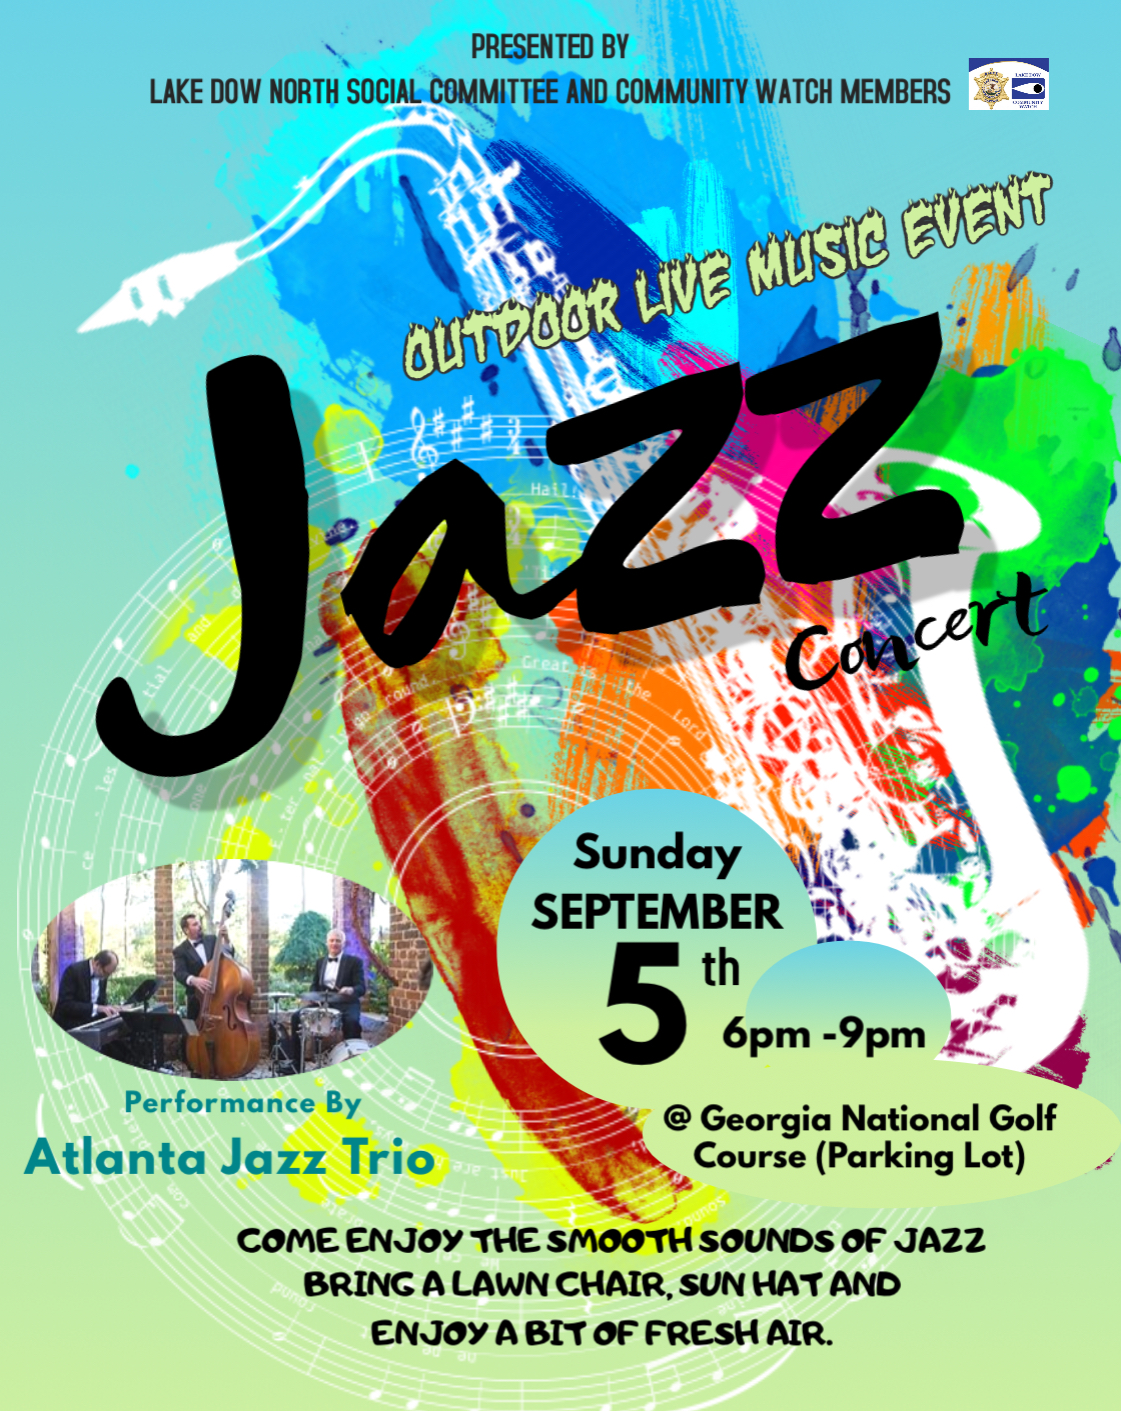 Live Jazz Concert Featuring The Atlanta Jazz Trio